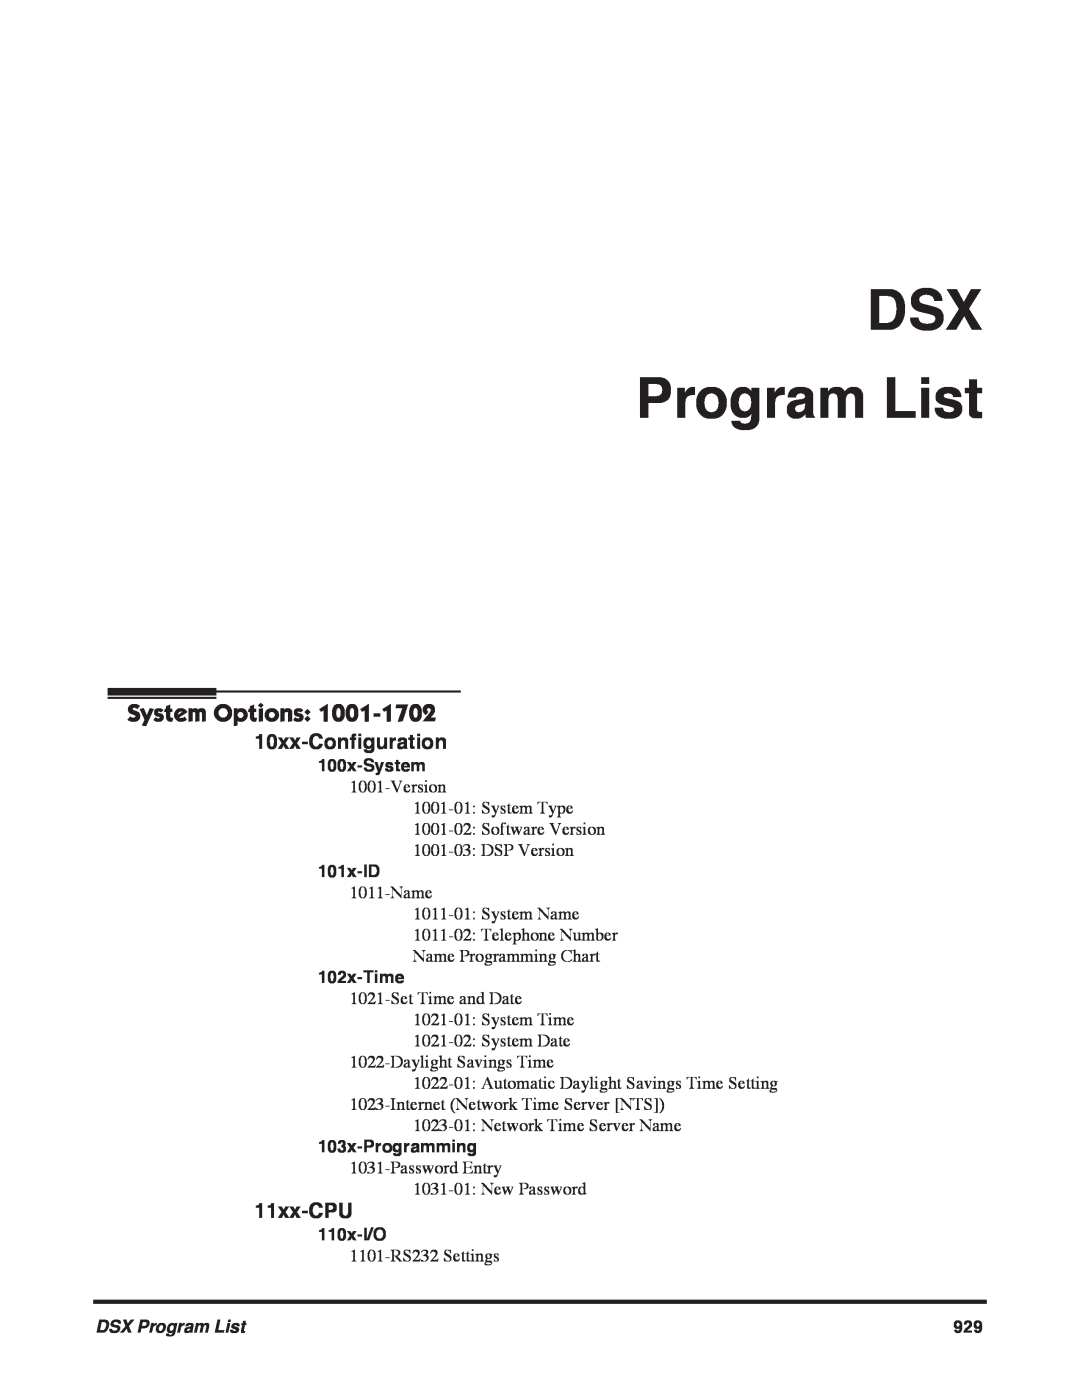 NEC DSX Program List, System Options, 10xx-Configuration, 11xx-CPU, 100x-System, 101x-ID, 102x-Time, 103x-Programming 